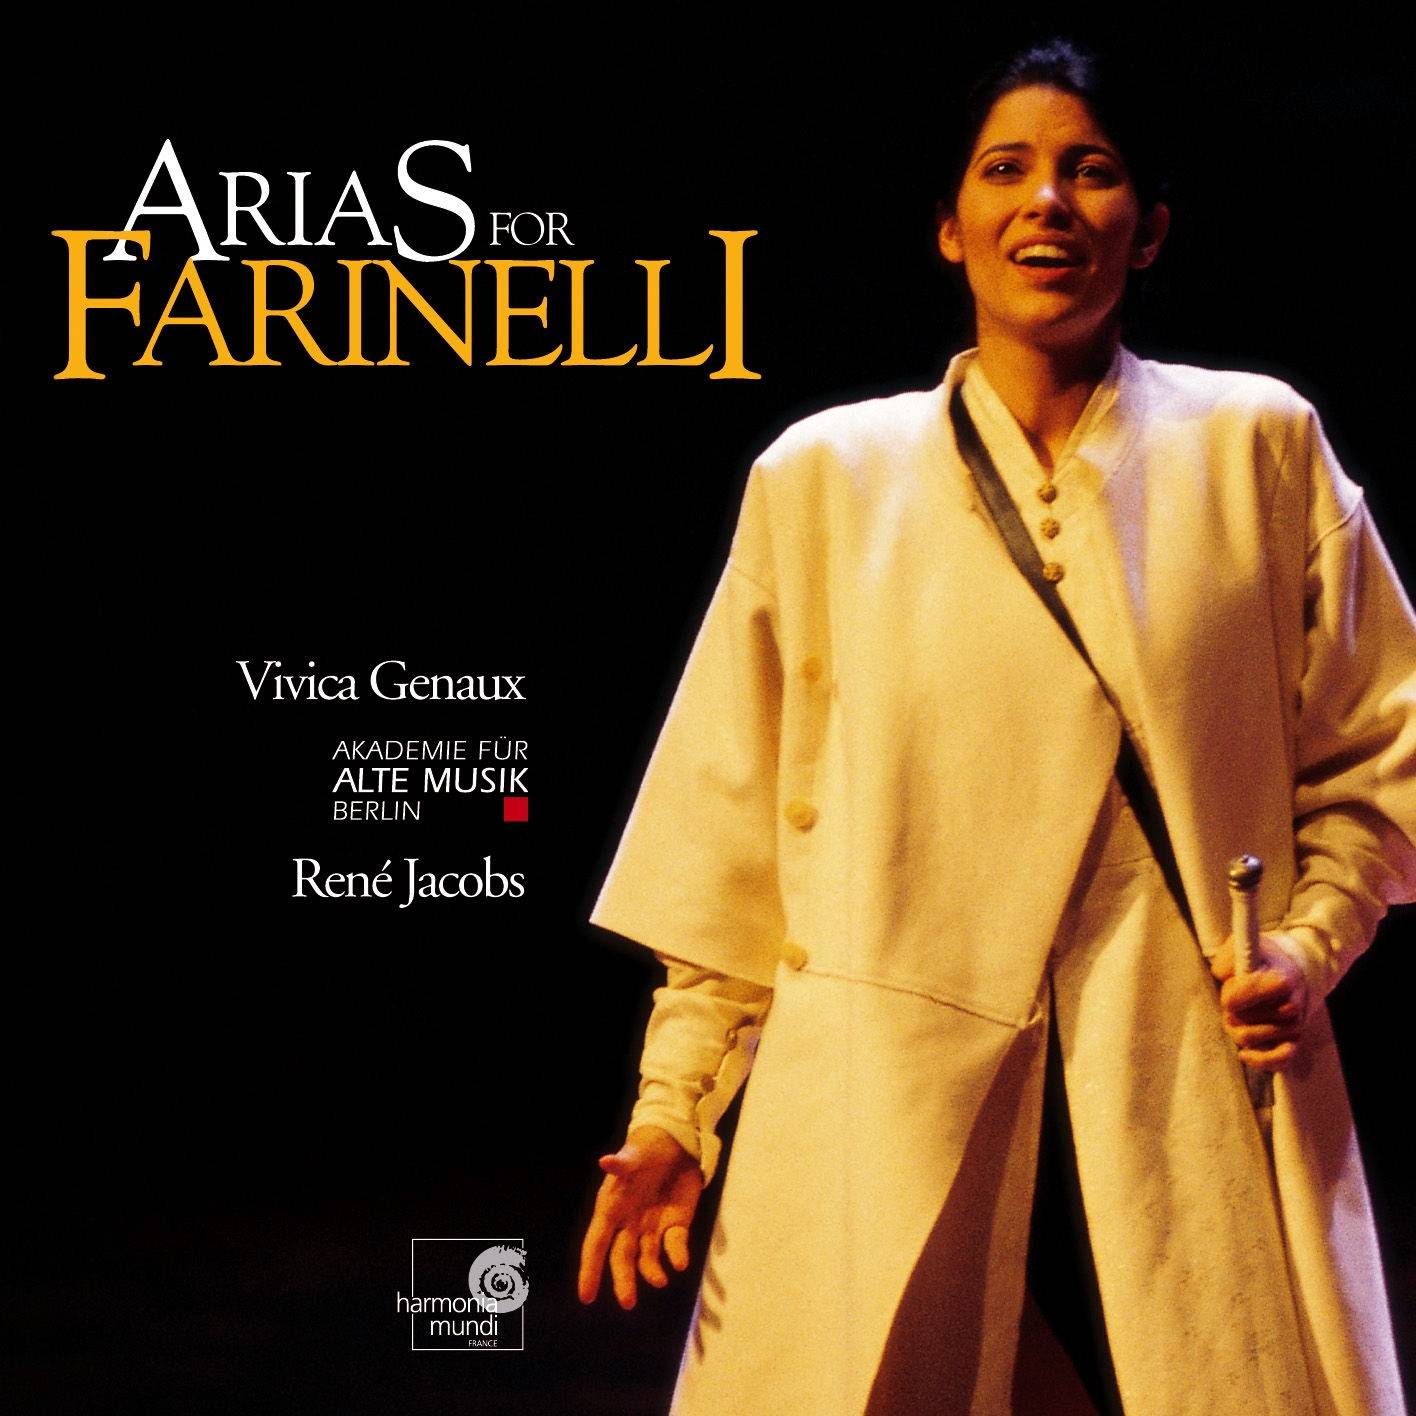 Vivica Genaux, Akademie fur Alte Musik Berlin, Rene Jacobs – Arias for Farinelli (2003) MCH SACD ISO + Hi-Res FLAC